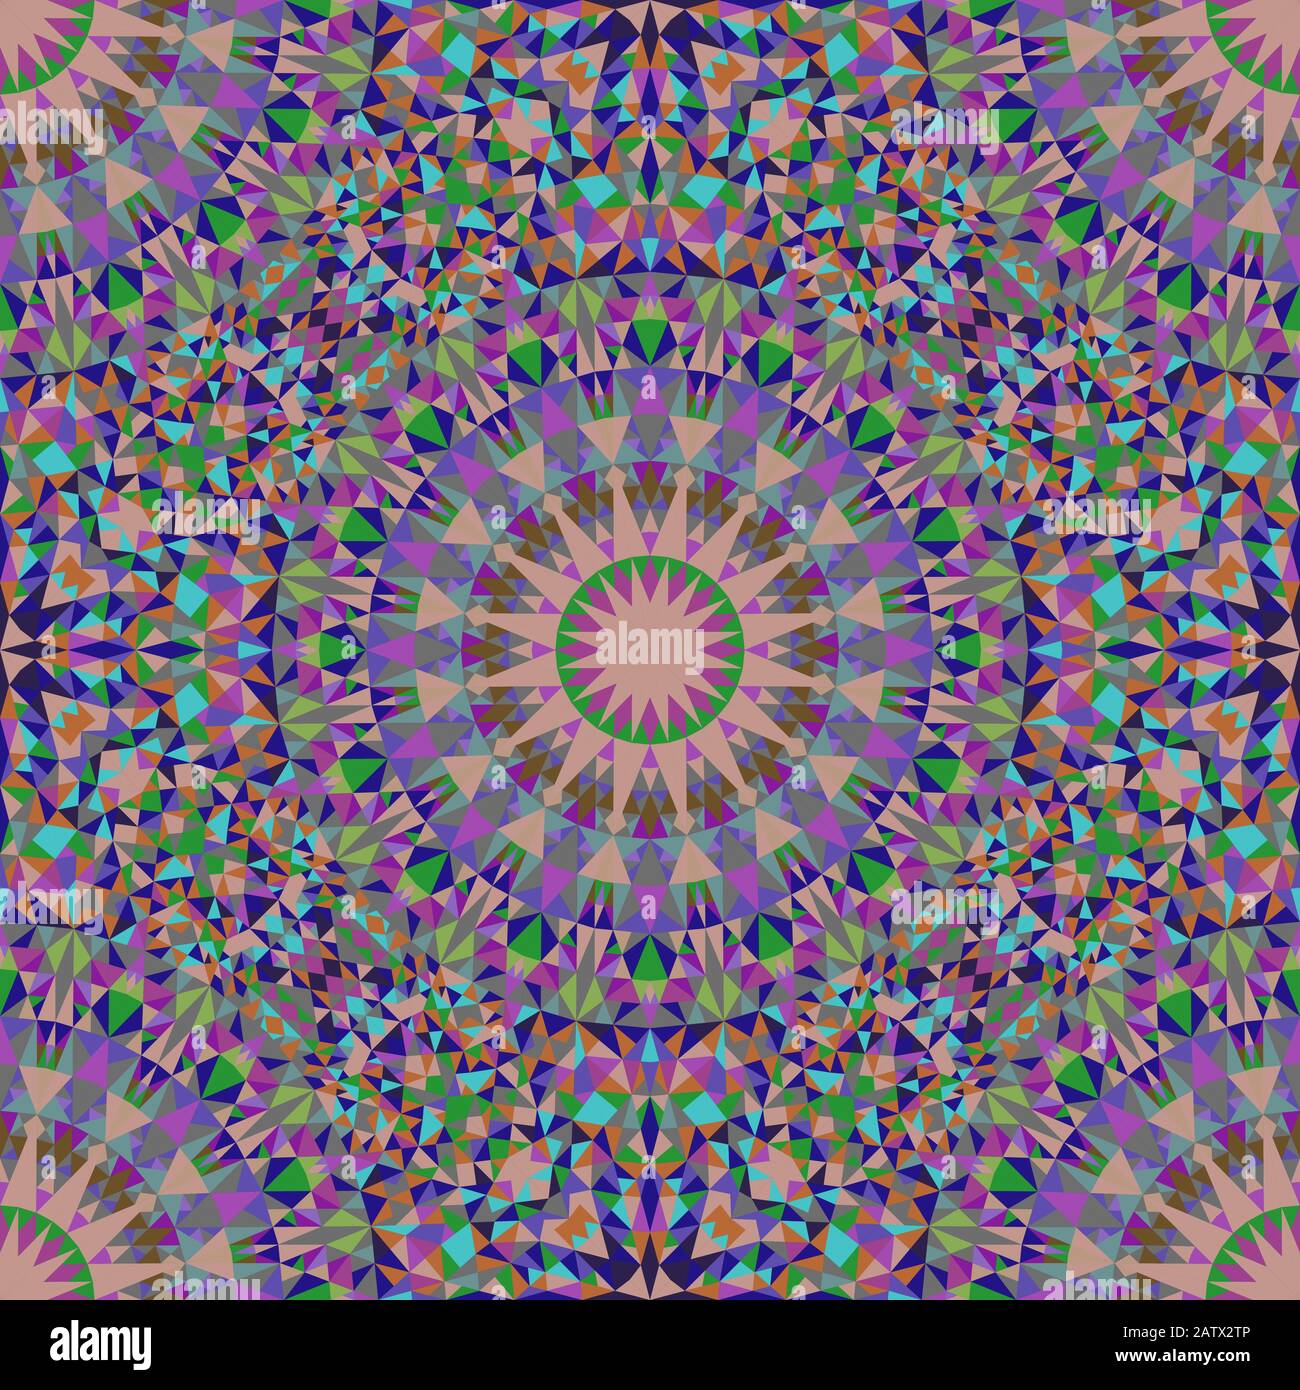 Böhmische Mandala-Muster Hintergrundgestaltung - abstrakte Vektorgrafik mit Mosaik Stock Vektor